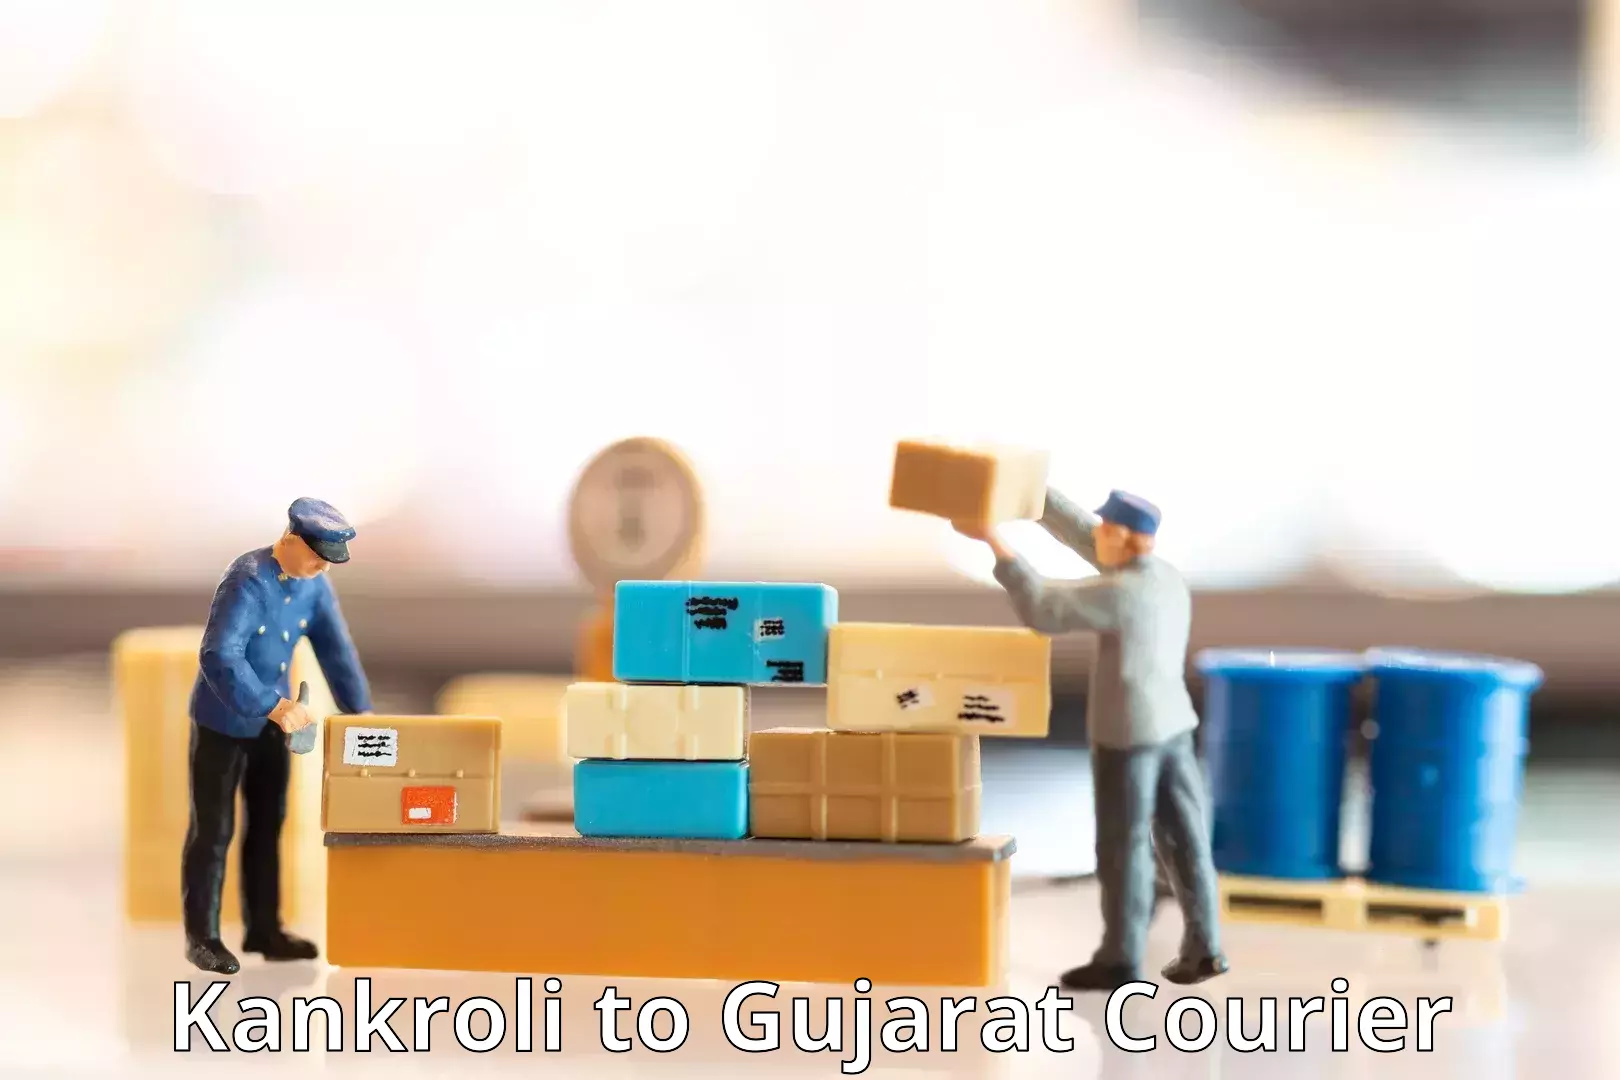 Enhanced tracking features Kankroli to Gujarat